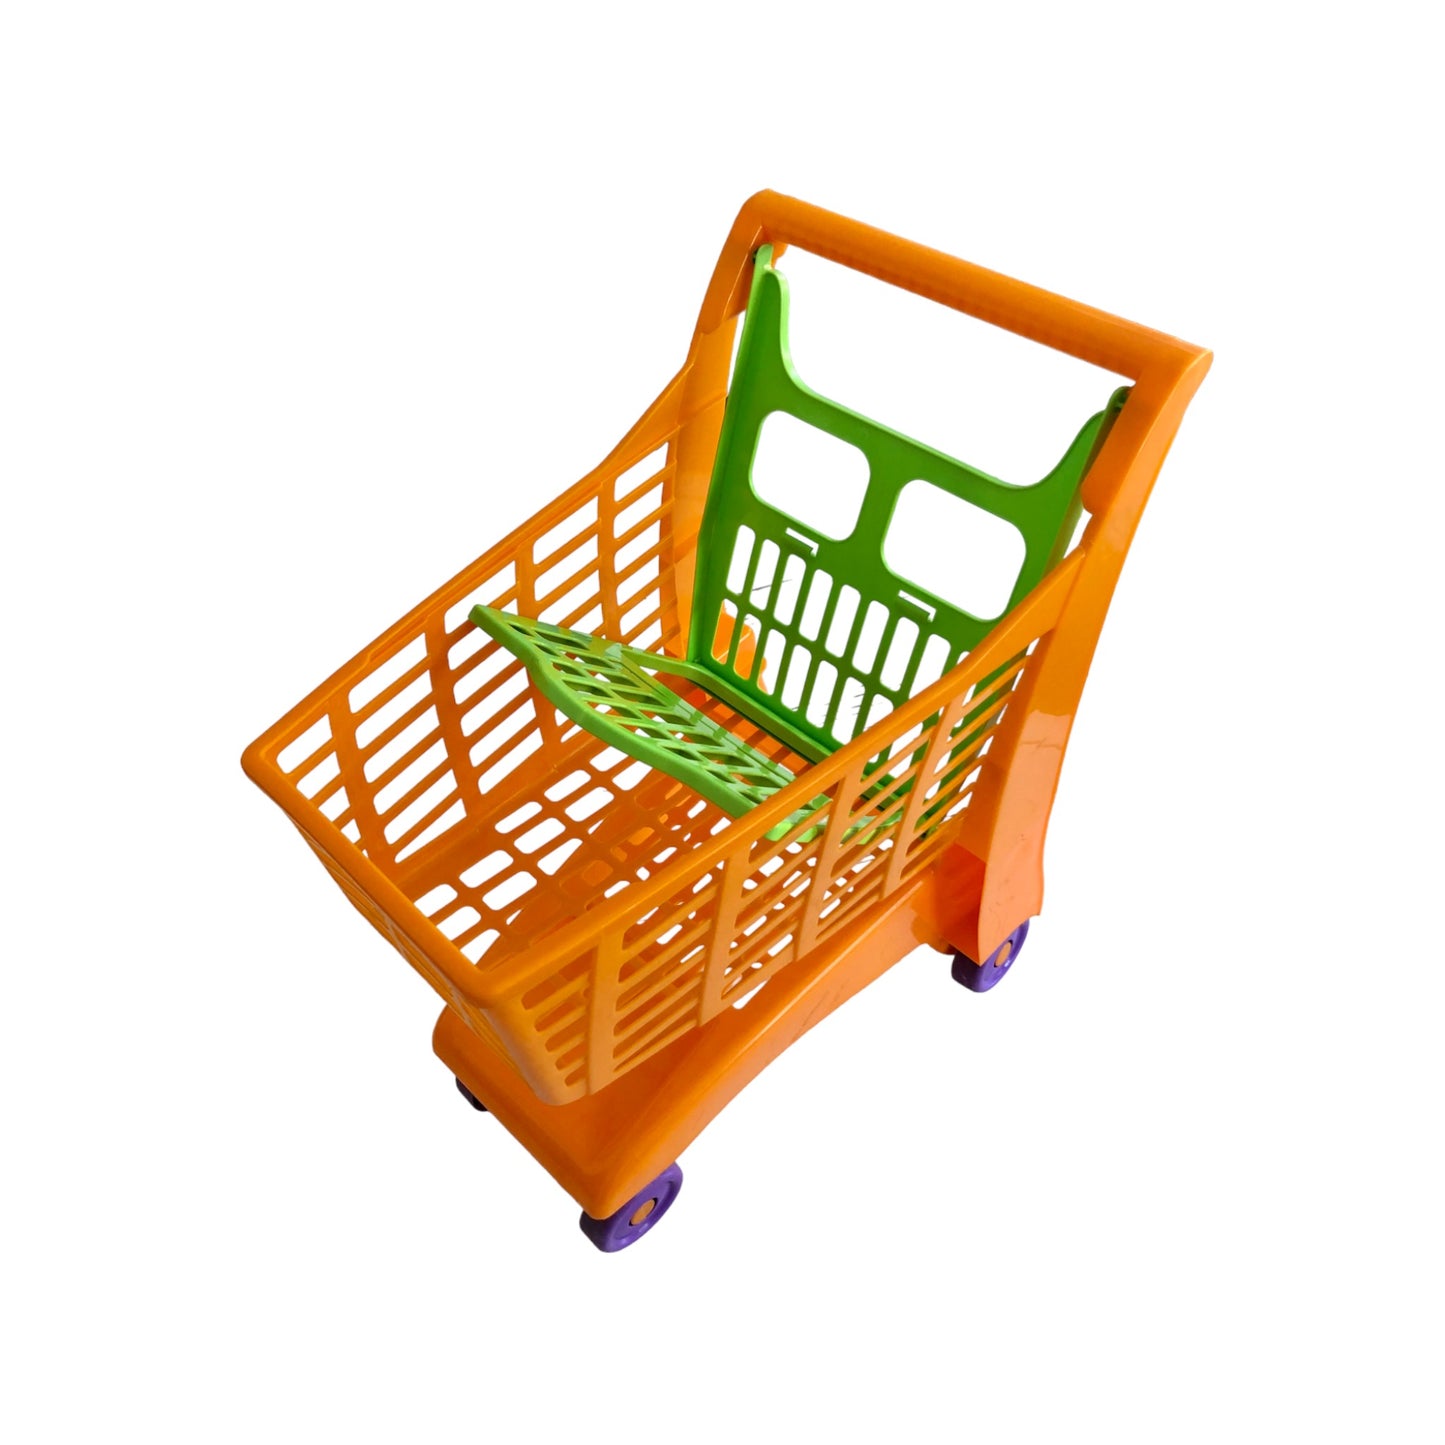 Supermarket trolley toy - Pretend play